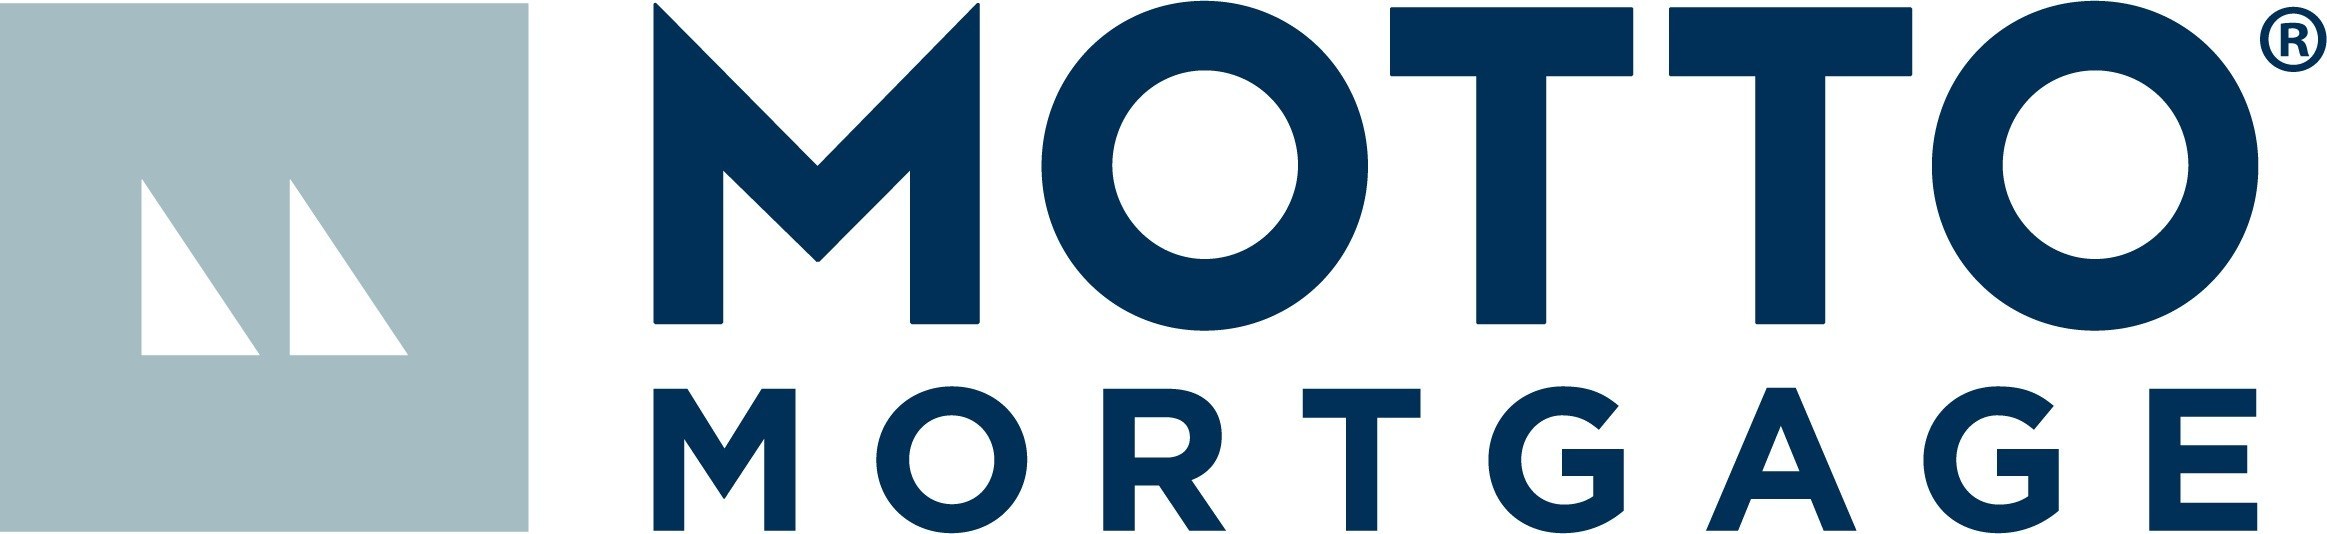 Motto Mortgage logo.